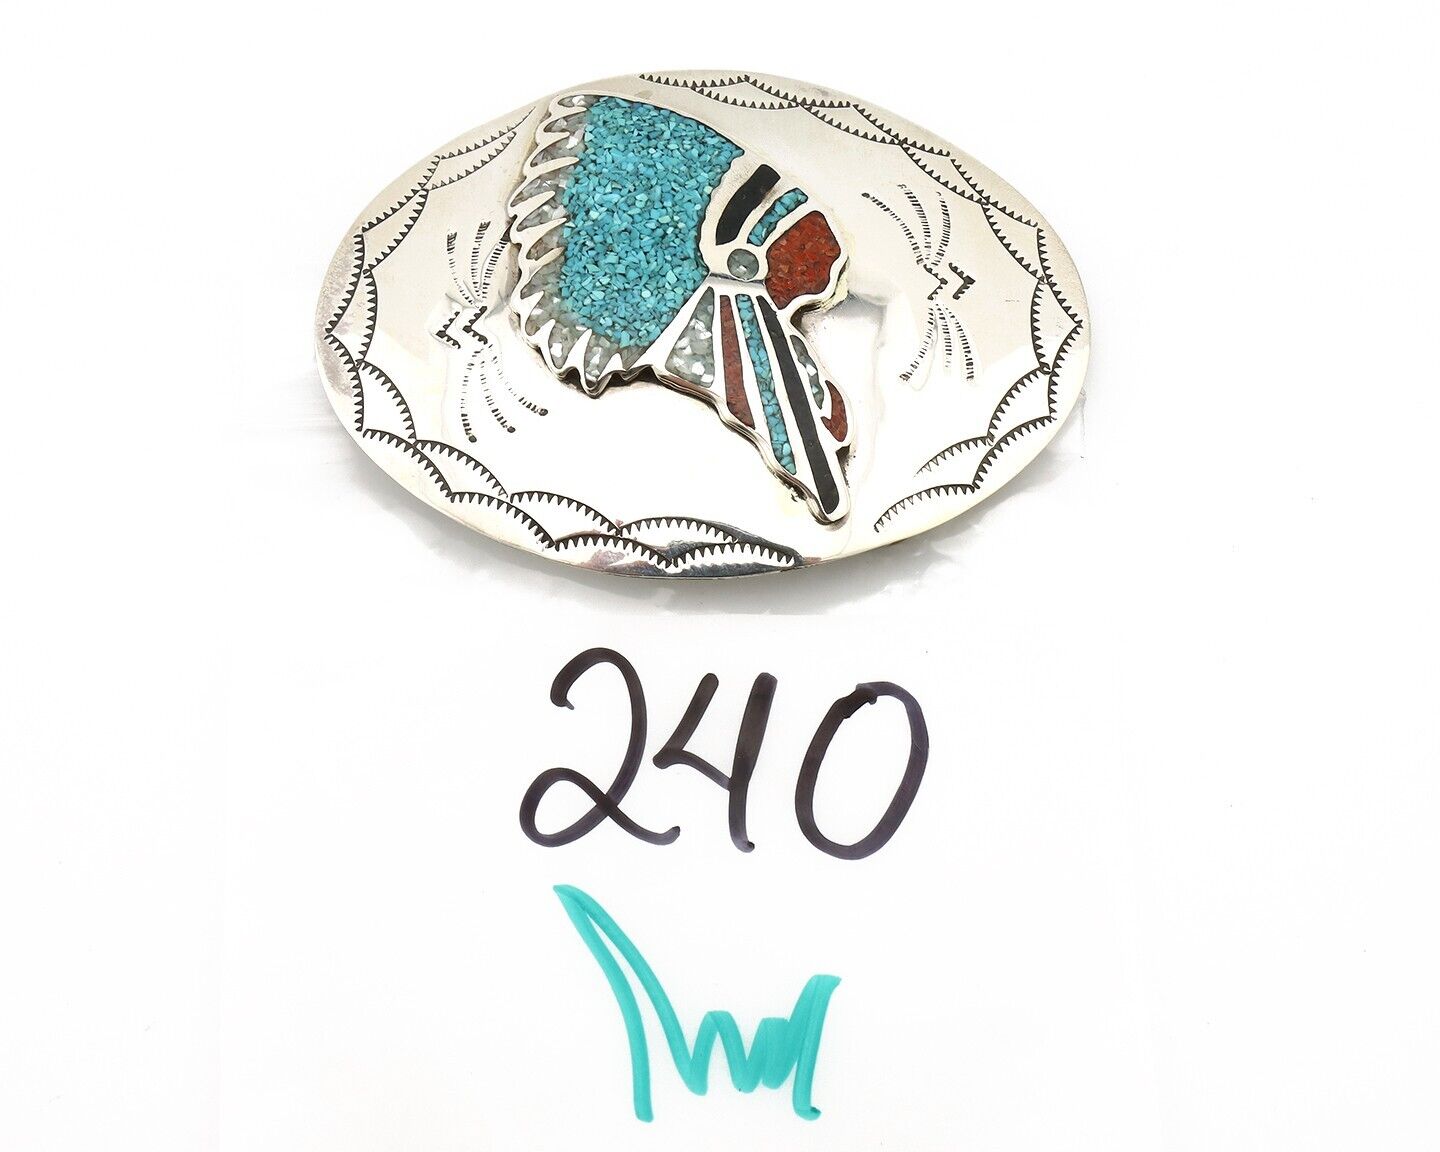 Navajo Belt Buckle 925 Silver Handmade Chip Inlay Artist Signed CP C.80s